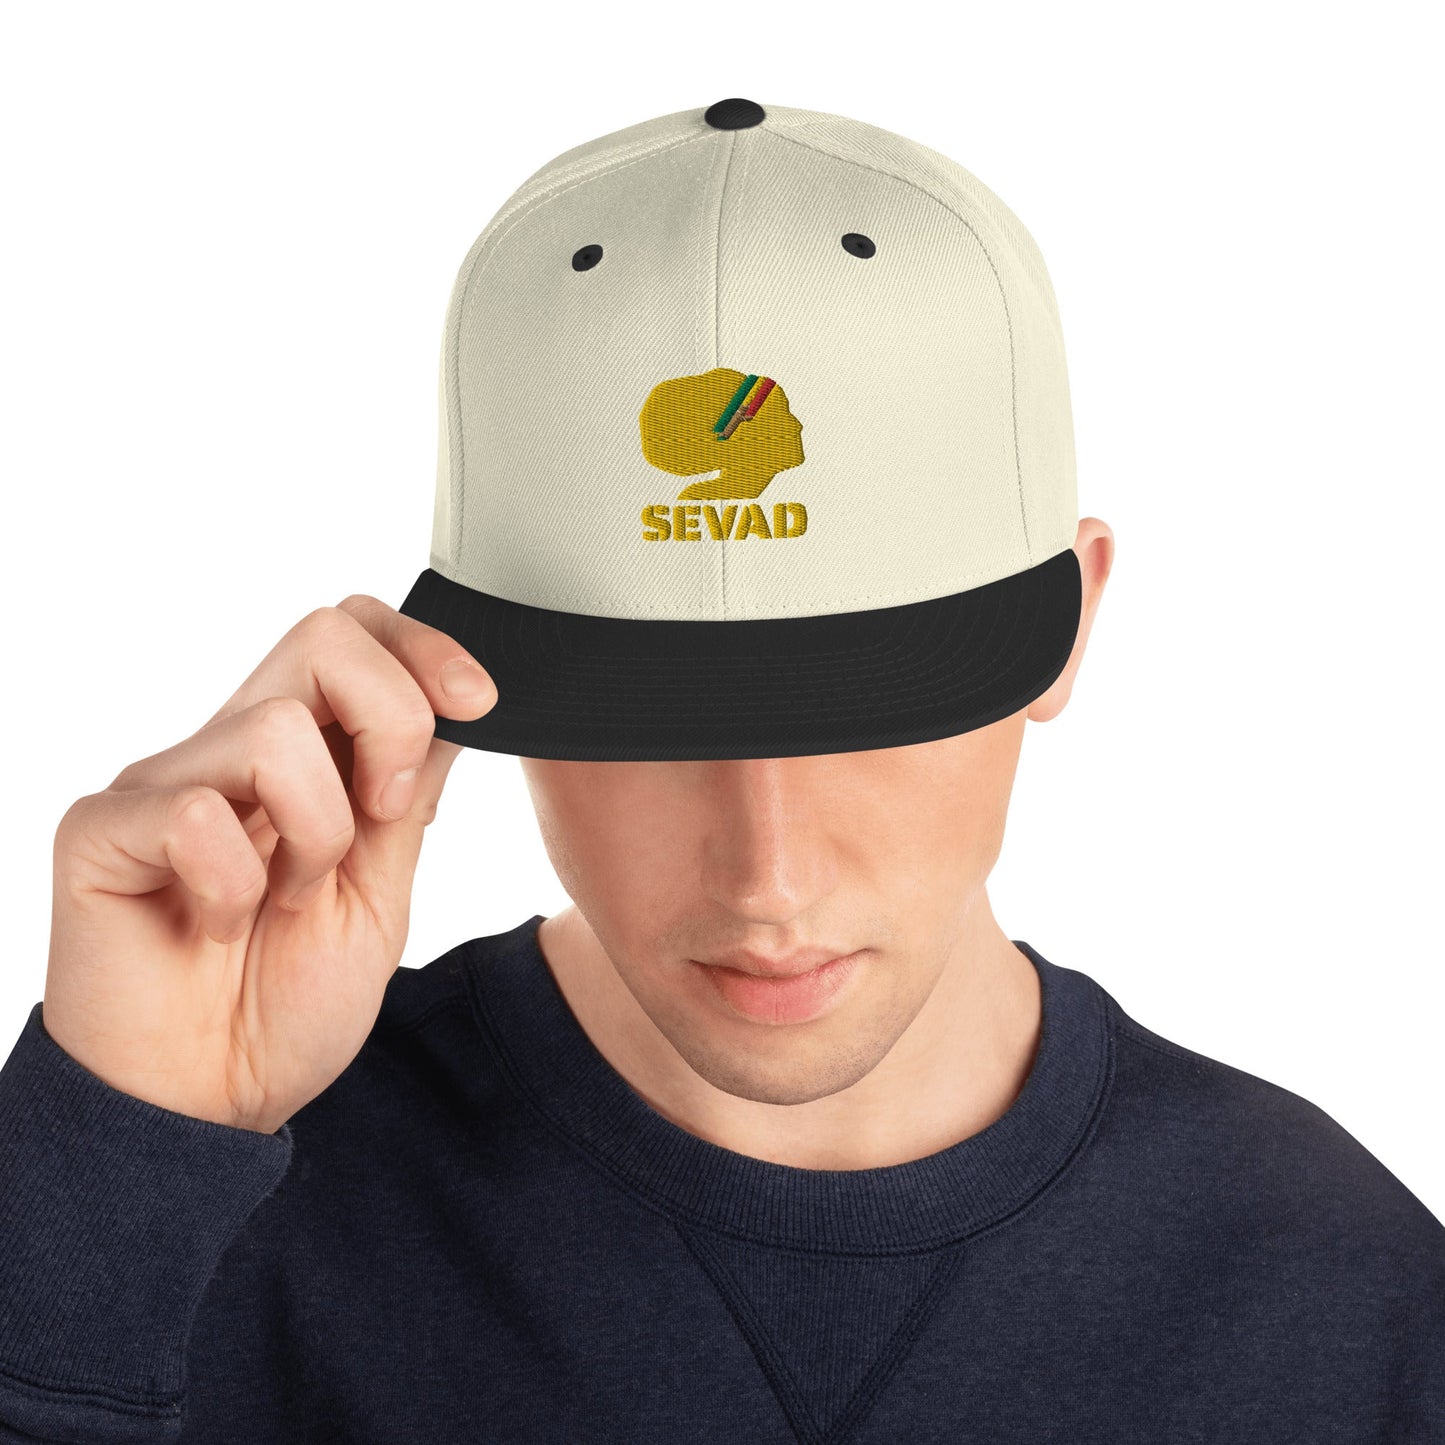 SEVAD Snapback Hat - SEVAD MUSIC HOUSE - Snapback Hat - SEVAD MUSIC HOUSE - 7123262_4801 - Natural/ Black - - SEVAD Snapback Hat